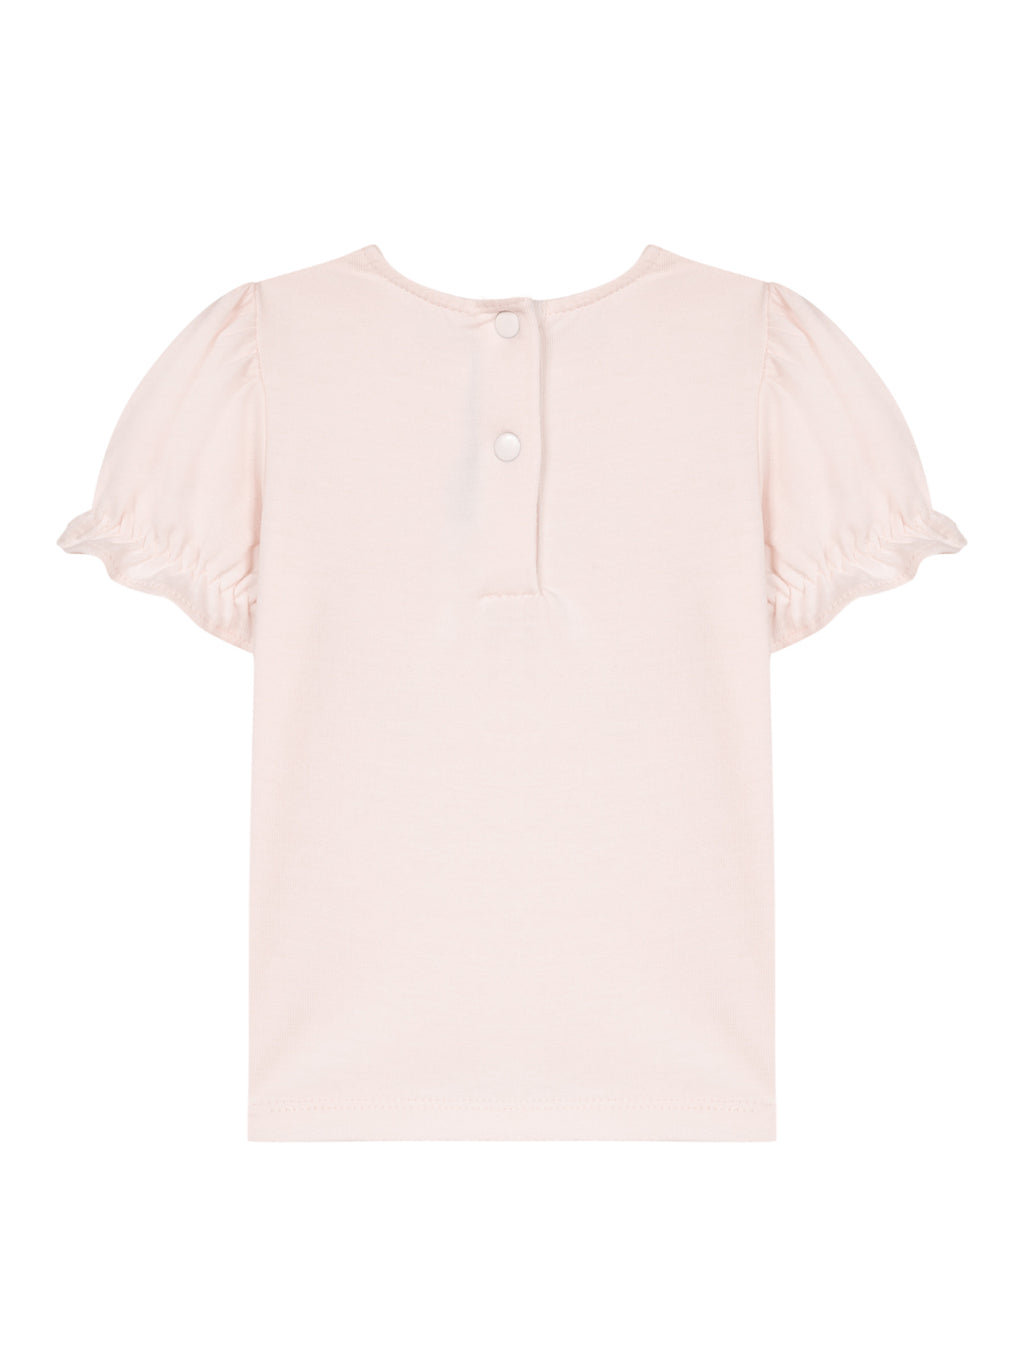 Tee-shirt - Jersey rose pâle